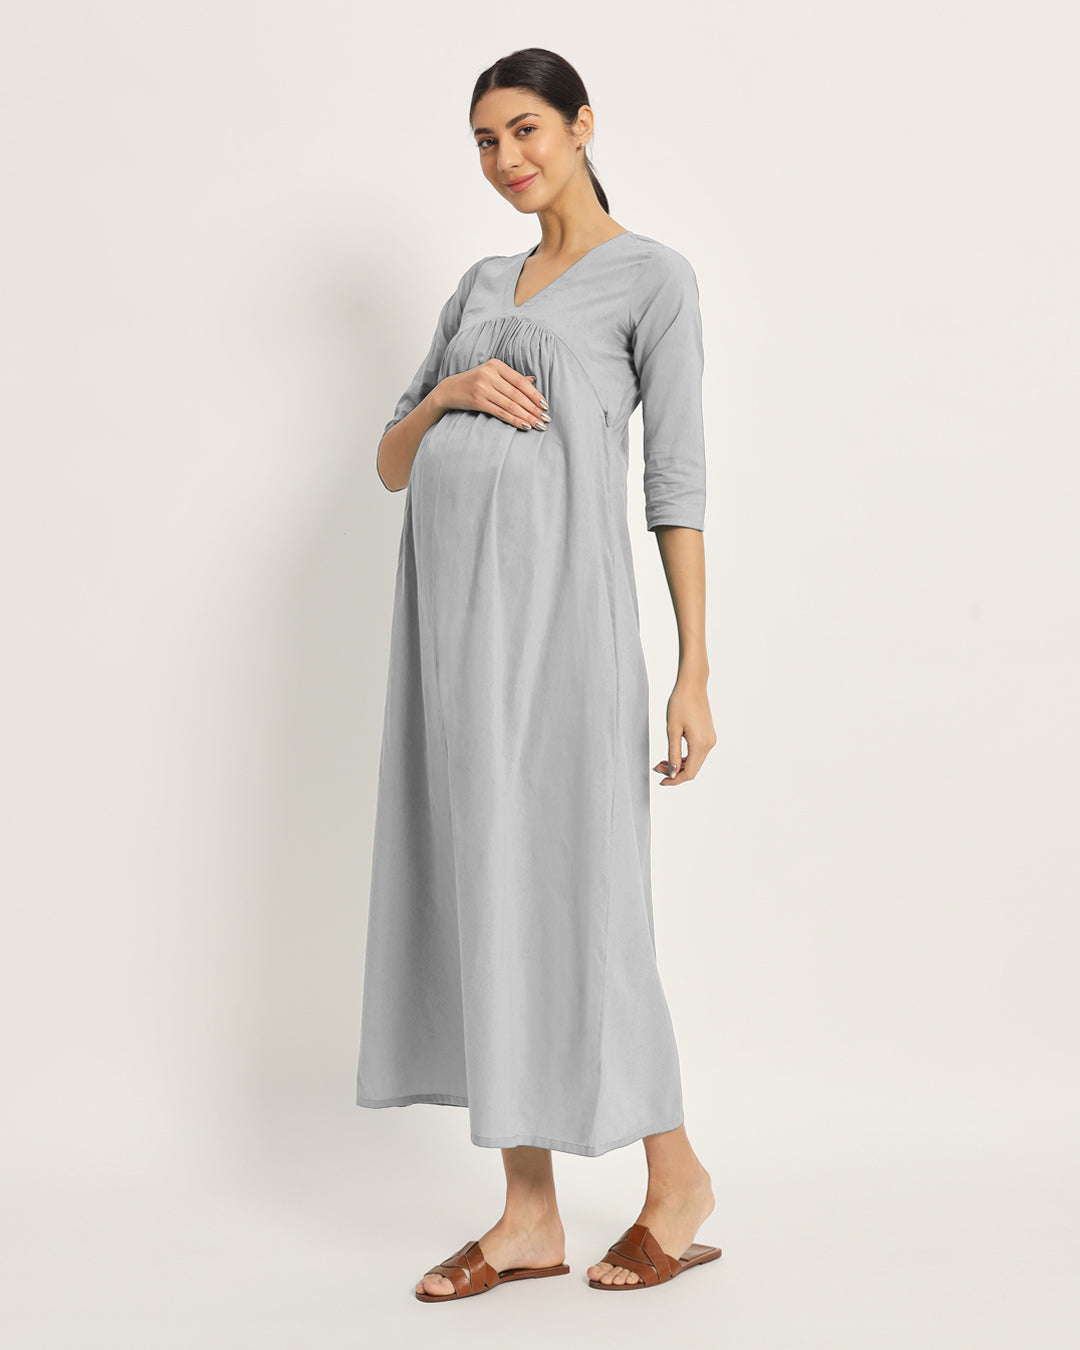 Combo: Iced grey & Plum Passion Bump Comfort Maternity & Nursing Dress - Set of 2